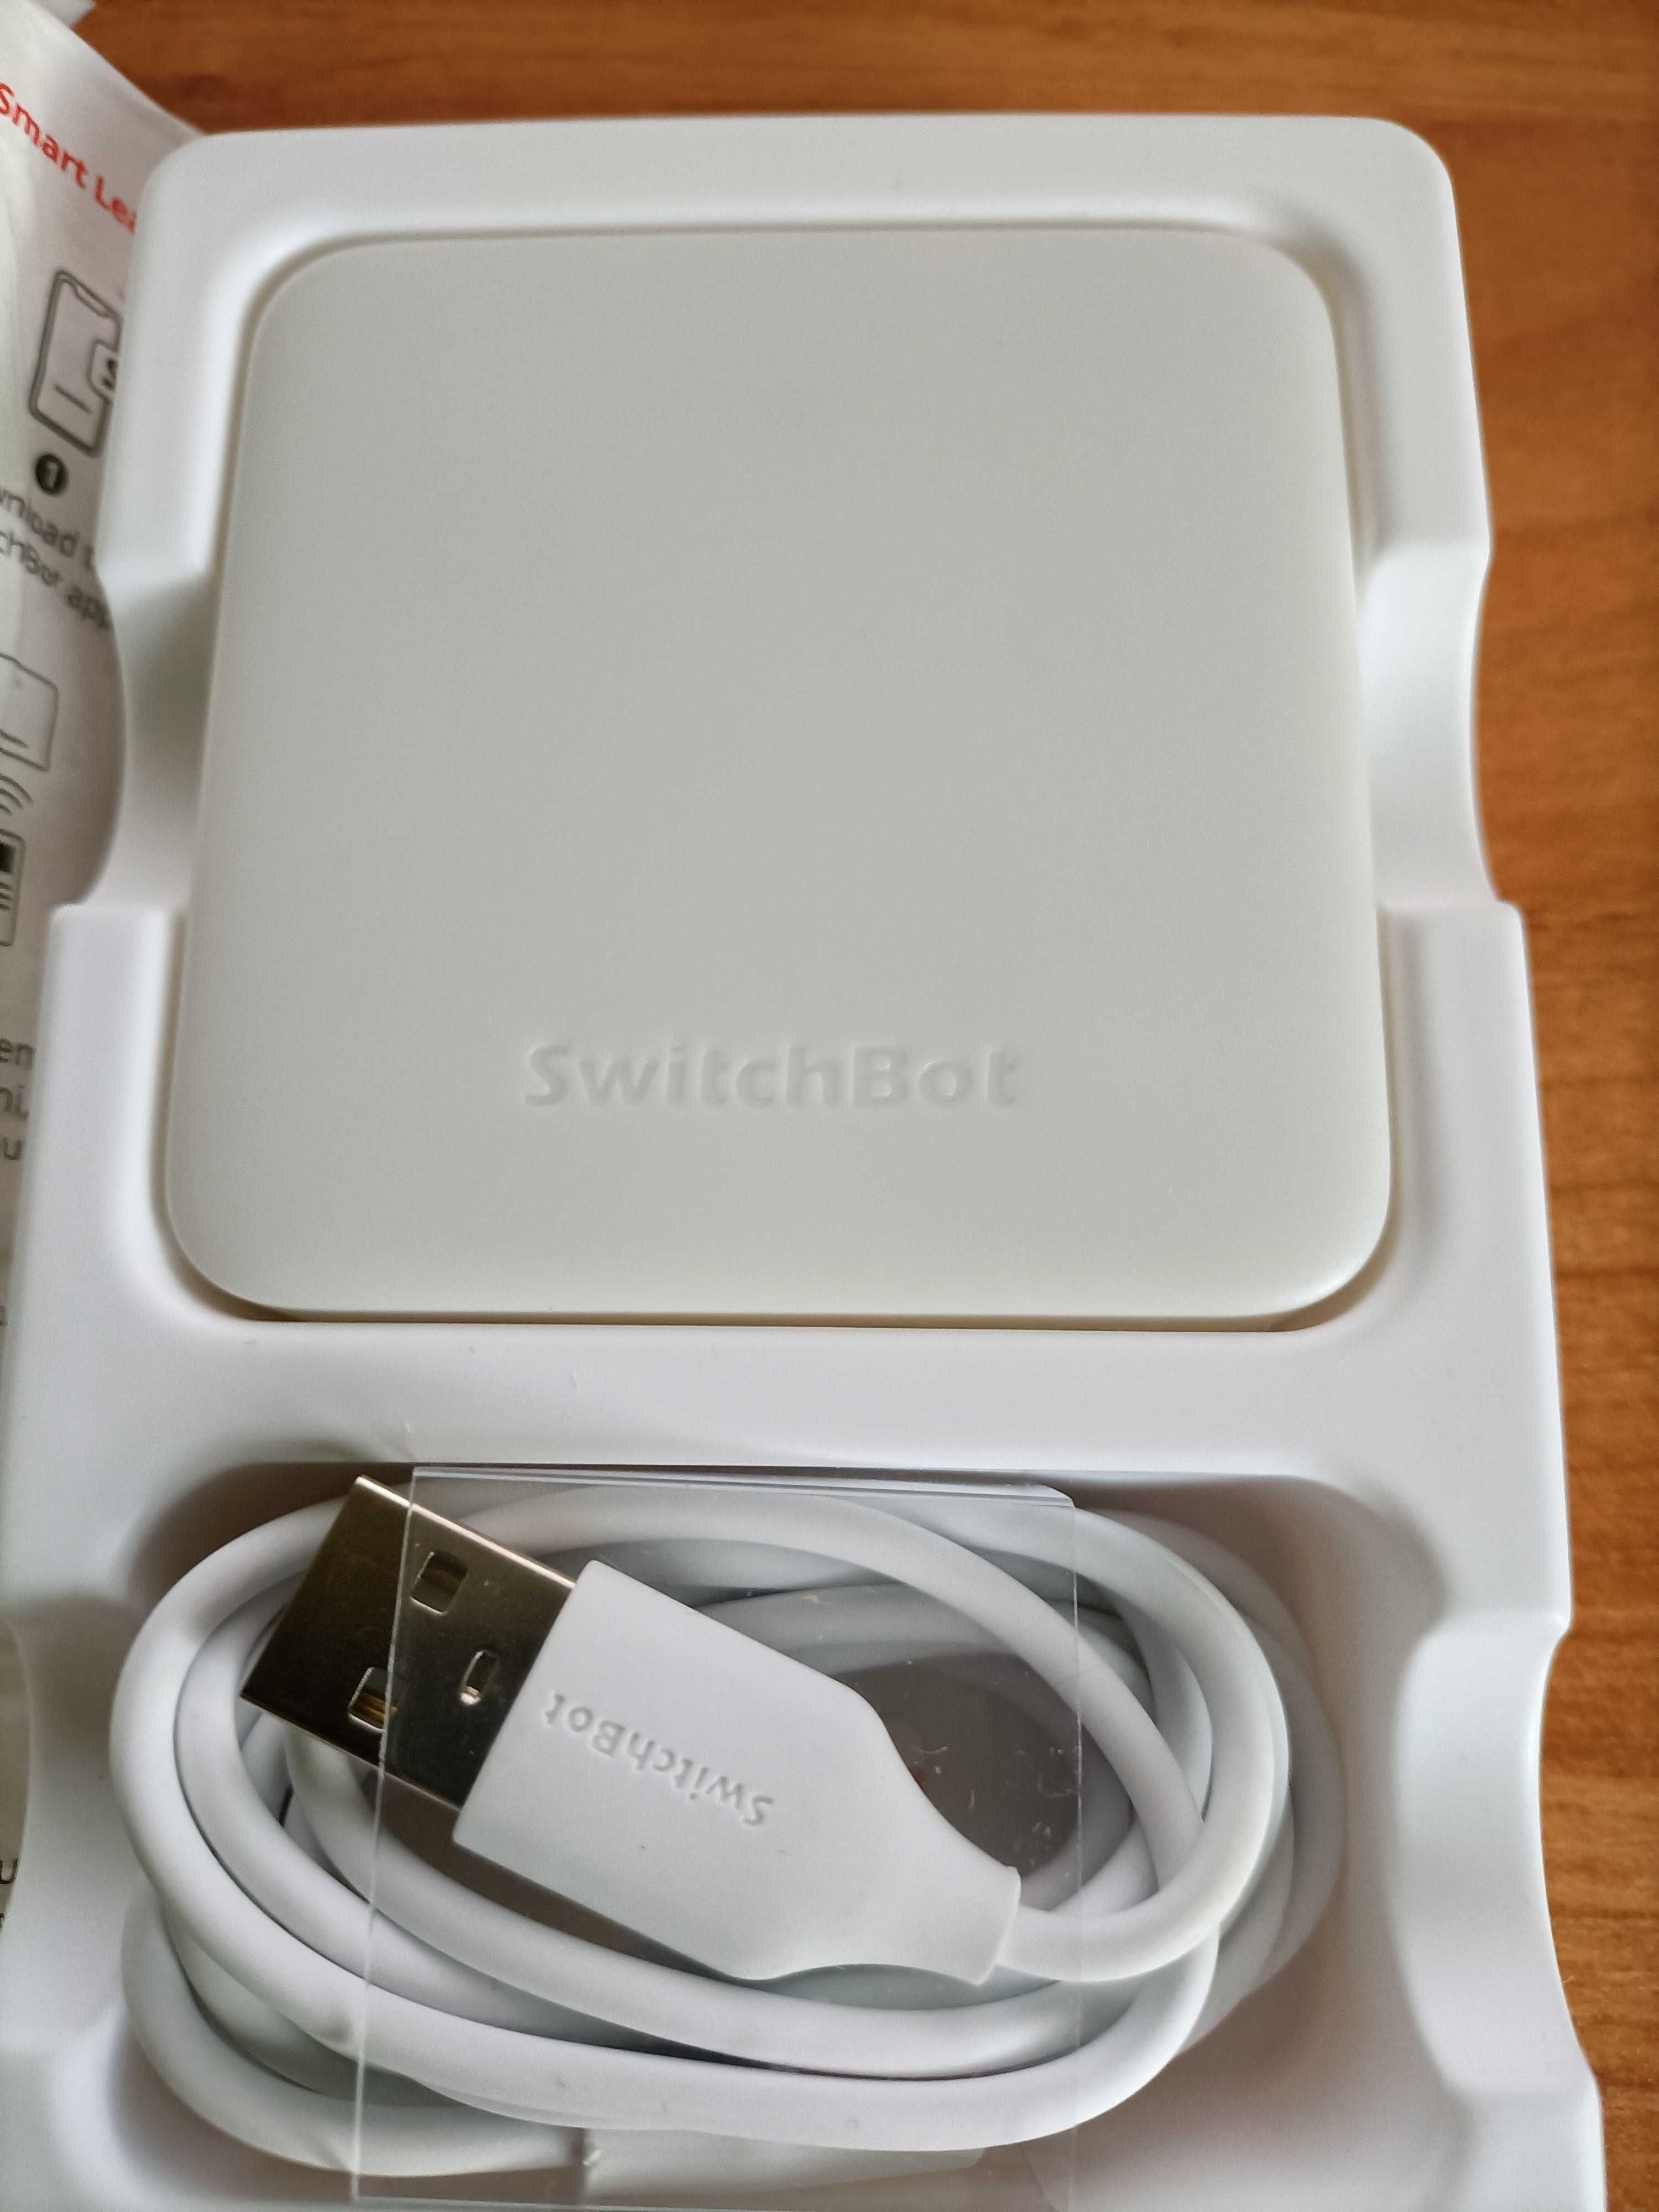 Switchbot hub mini